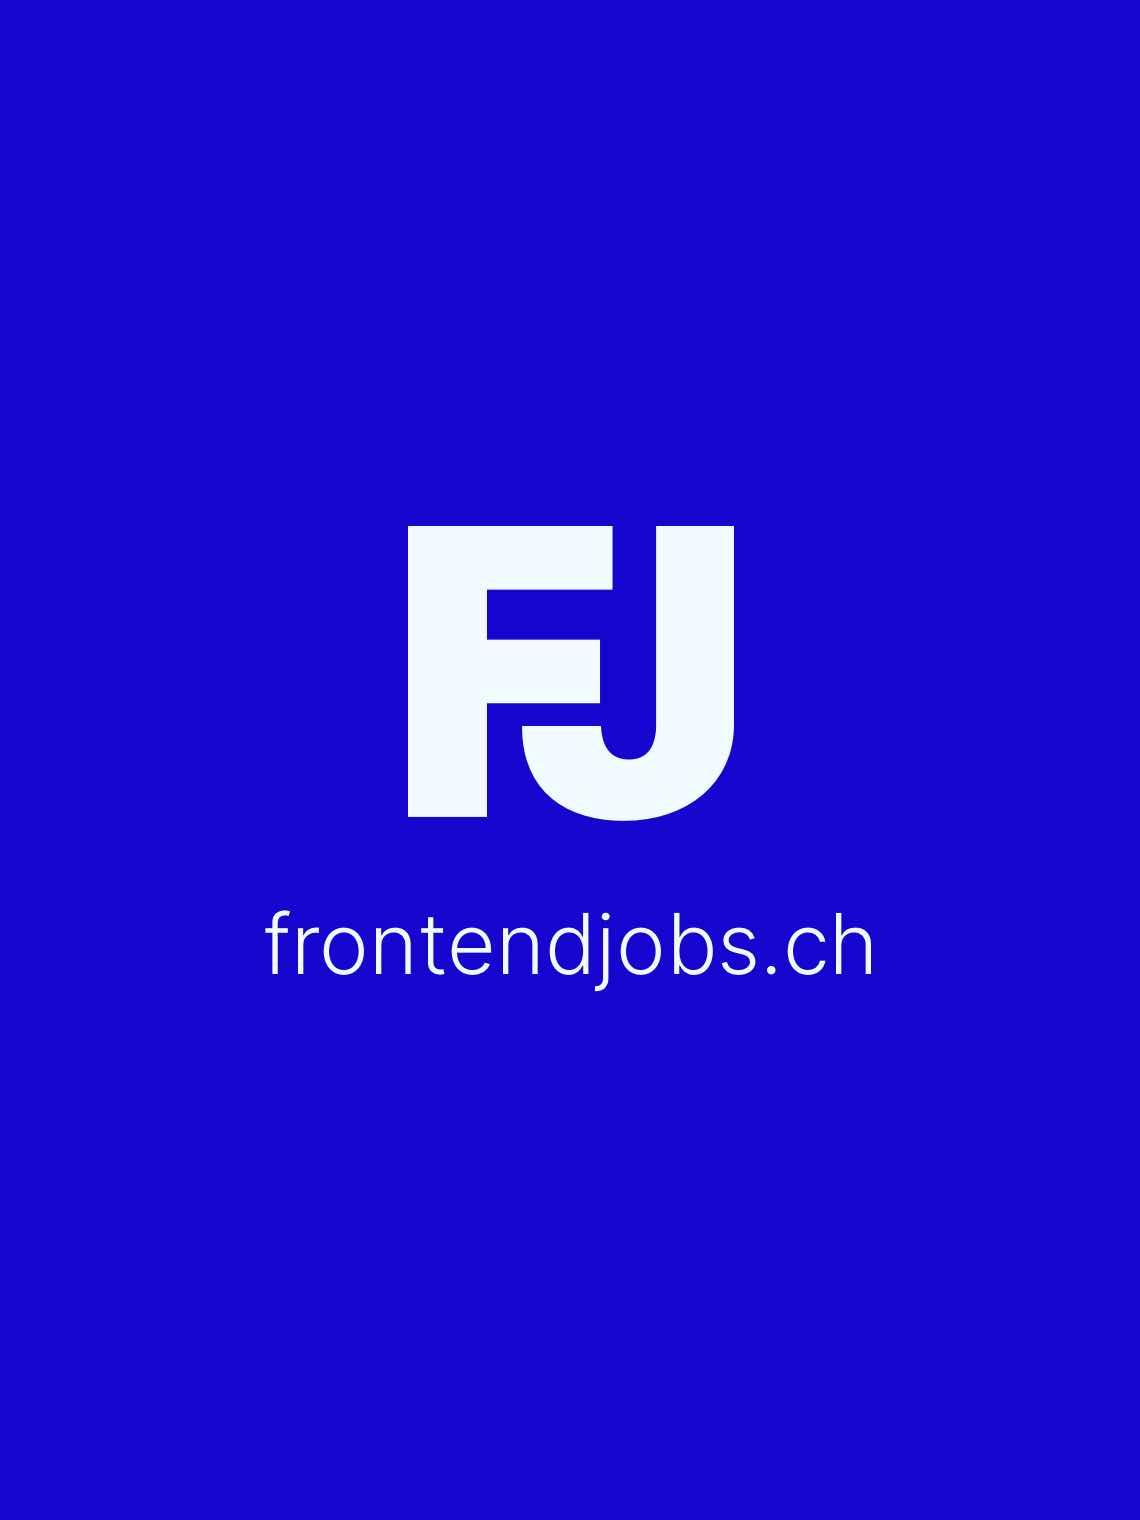 frontendjobs.ch